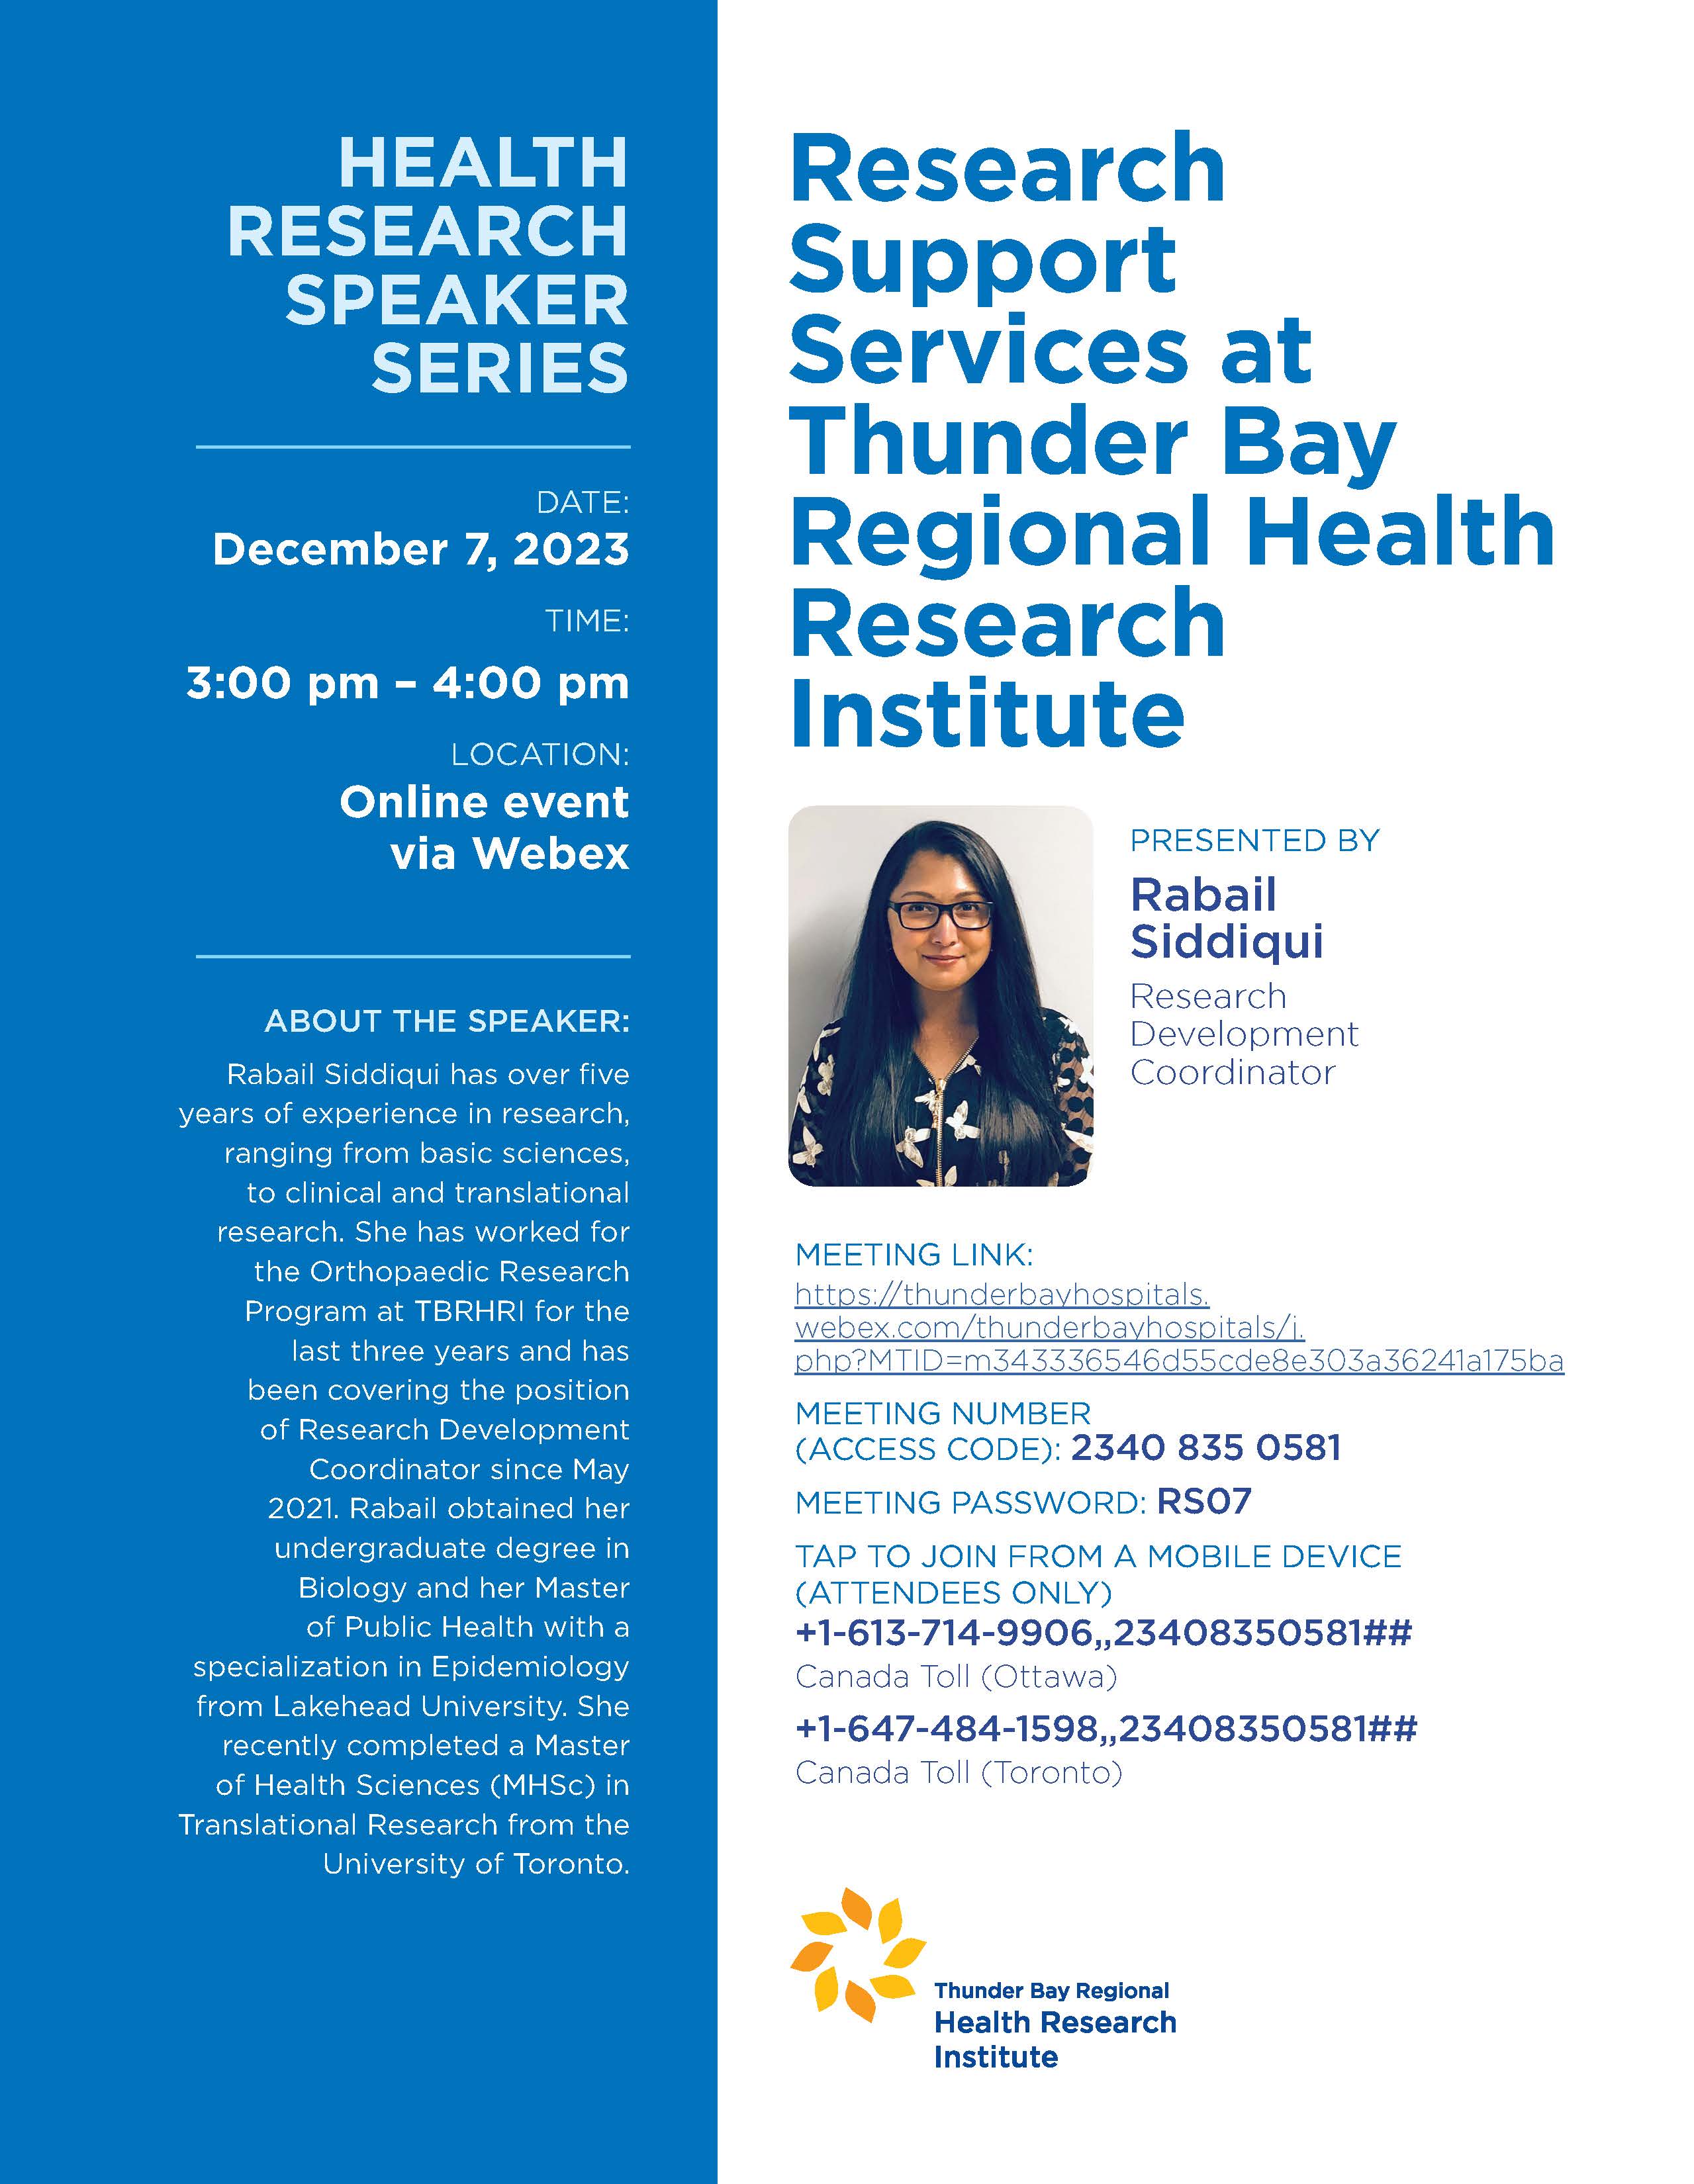 Thunder Bay Regional Health Research Institute Health Research Speaker Series: "Research Support Services at Thunder Bay Regional Health Research Institute" Poster